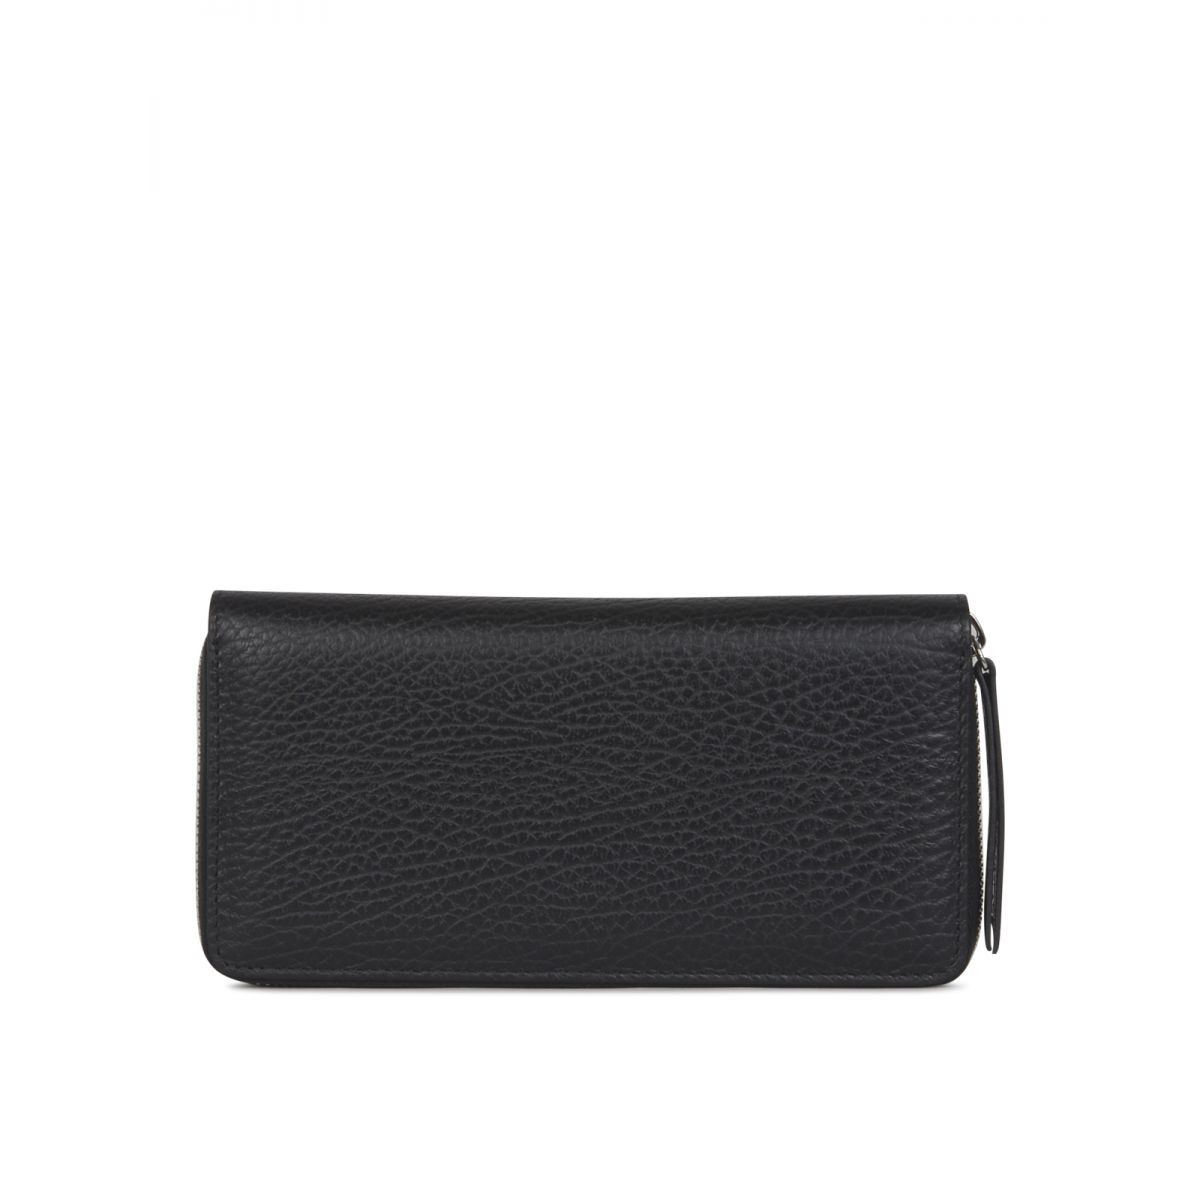 MAISON MARGIELA - Grained-leather purse